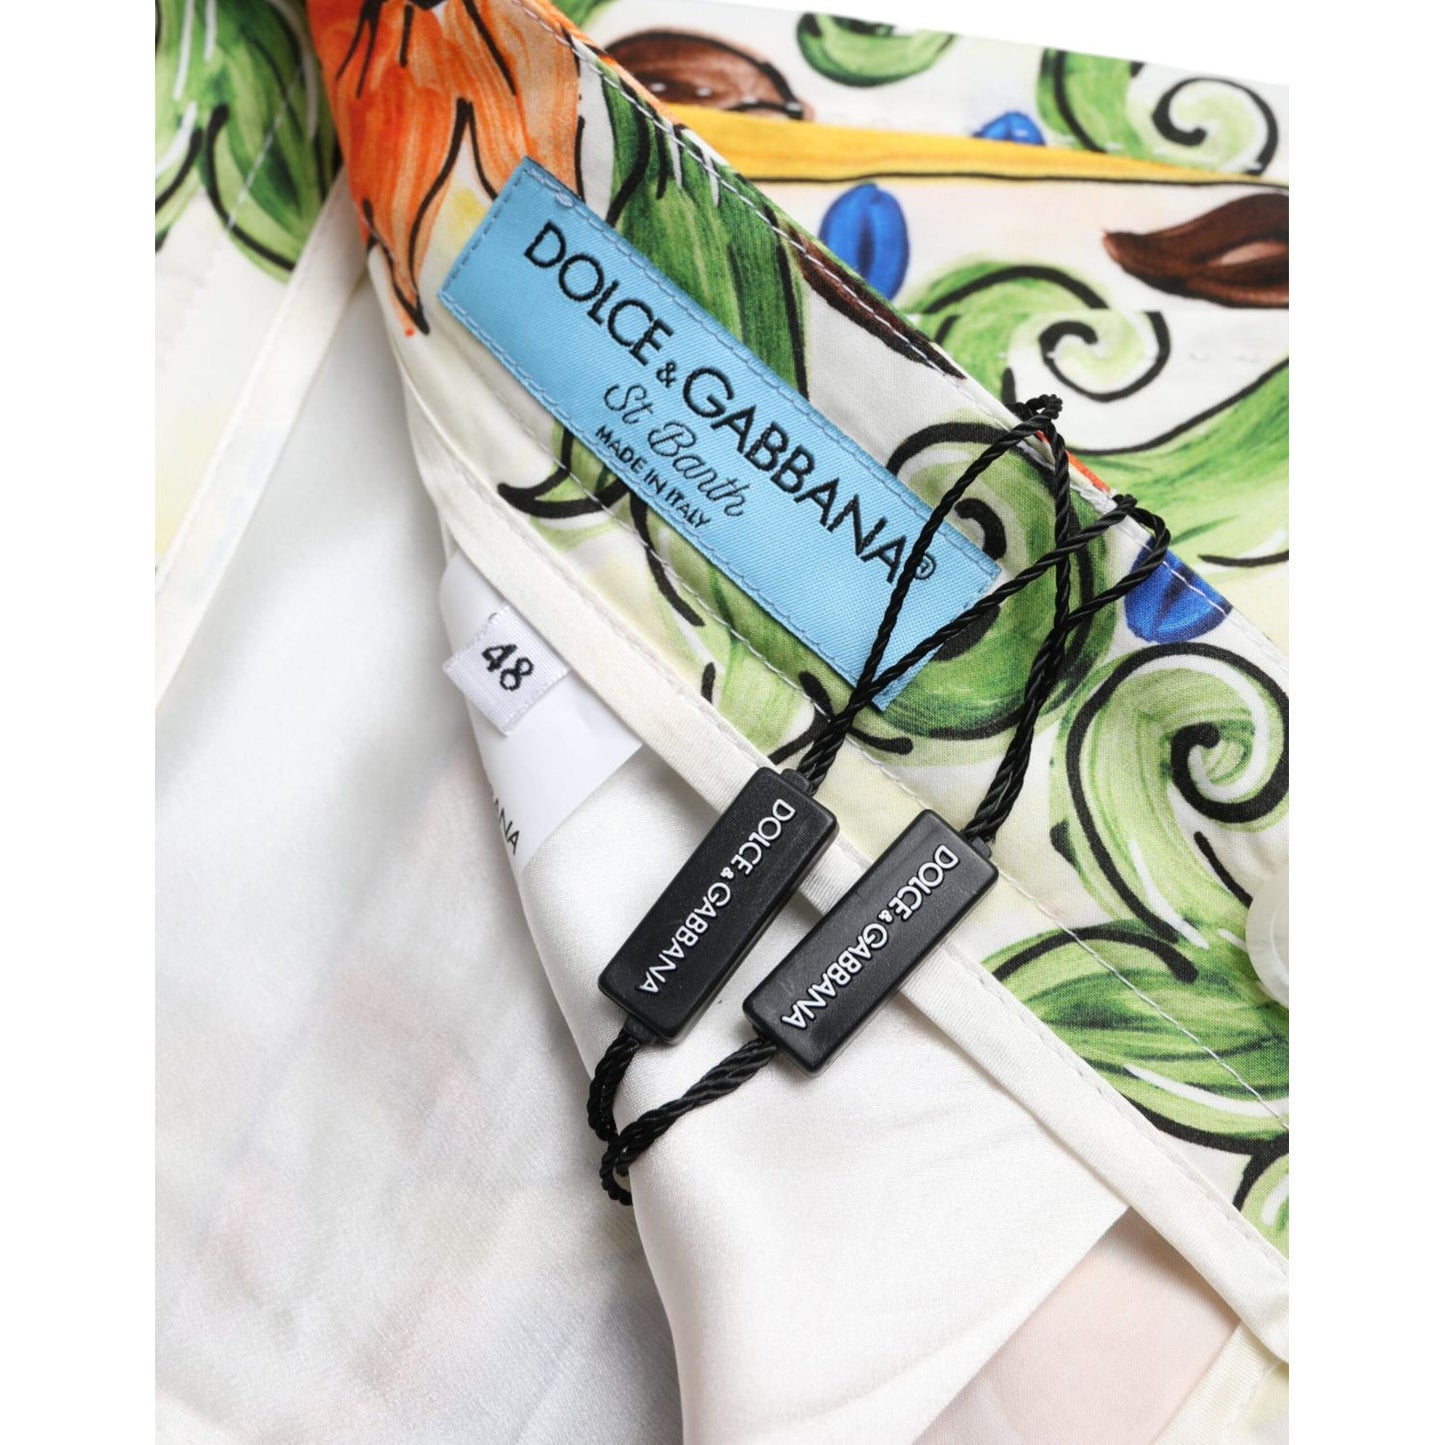 Dolce & Gabbana Majestic Majolica Print Bermuda Shorts majestic-majolica-print-bermuda-shorts